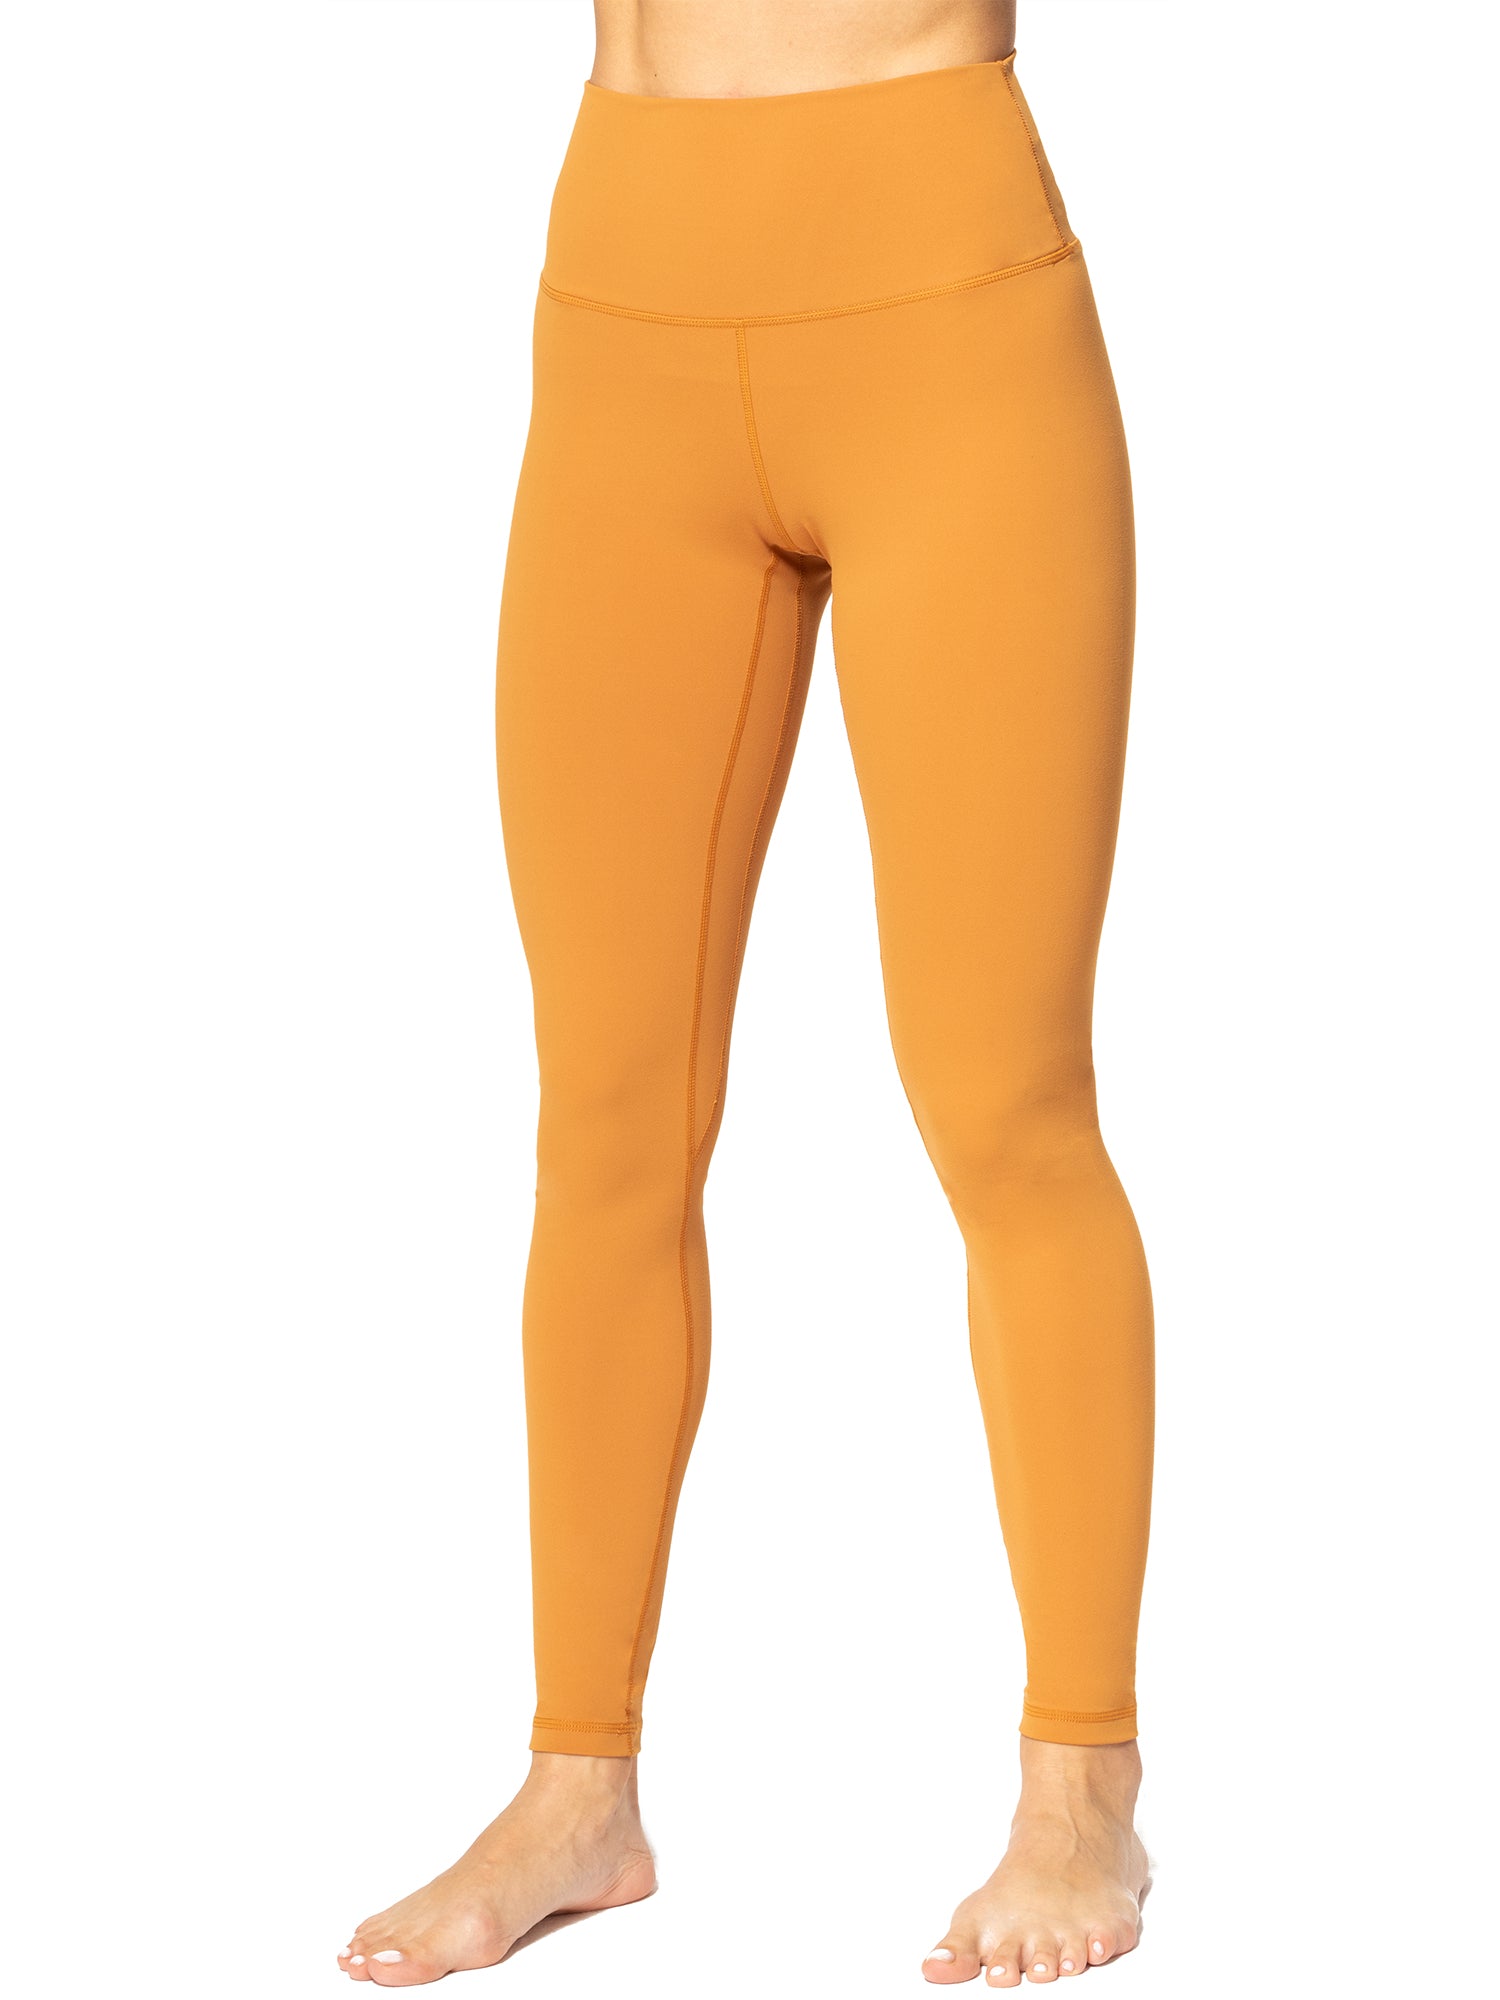 Sunzel Workout Leggings For Women, Squat Proof High Waisted Yoga Pants 4  Way Stretch, Buttery Soft V Cross Waist